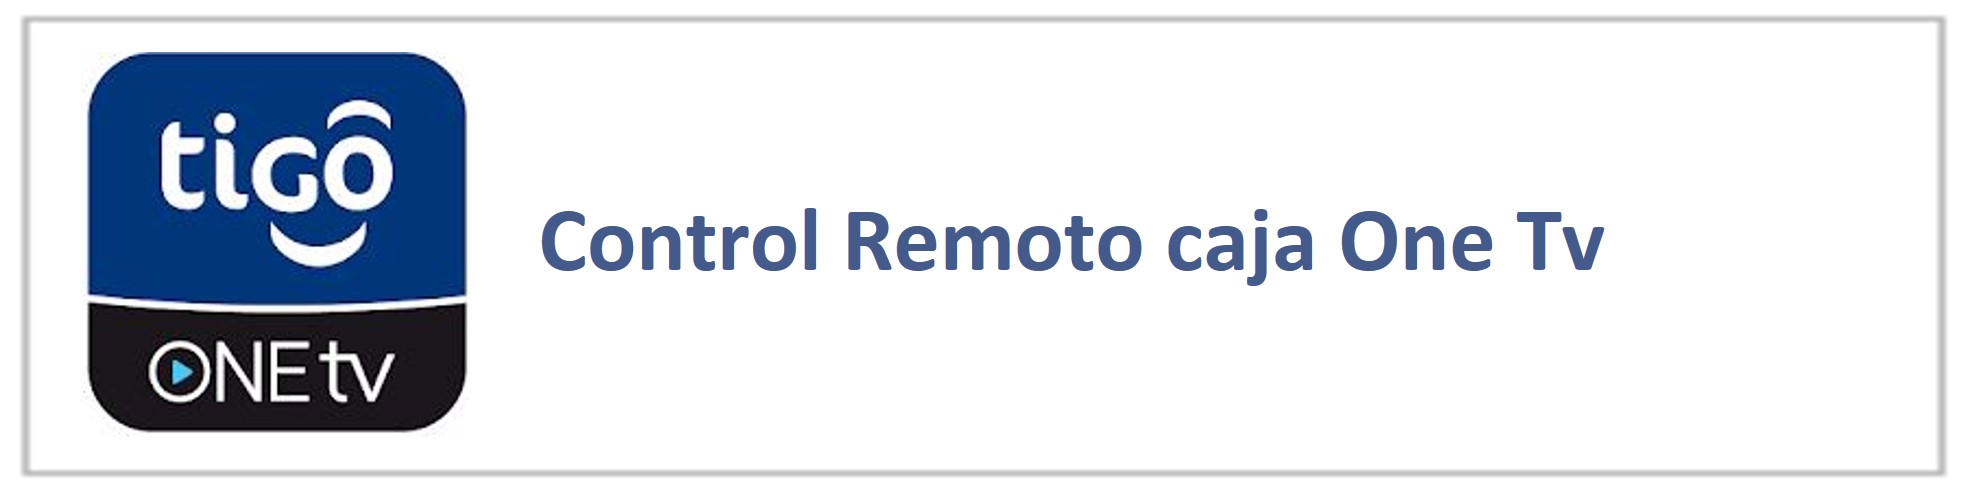 One_tv_control_remoto.jpg